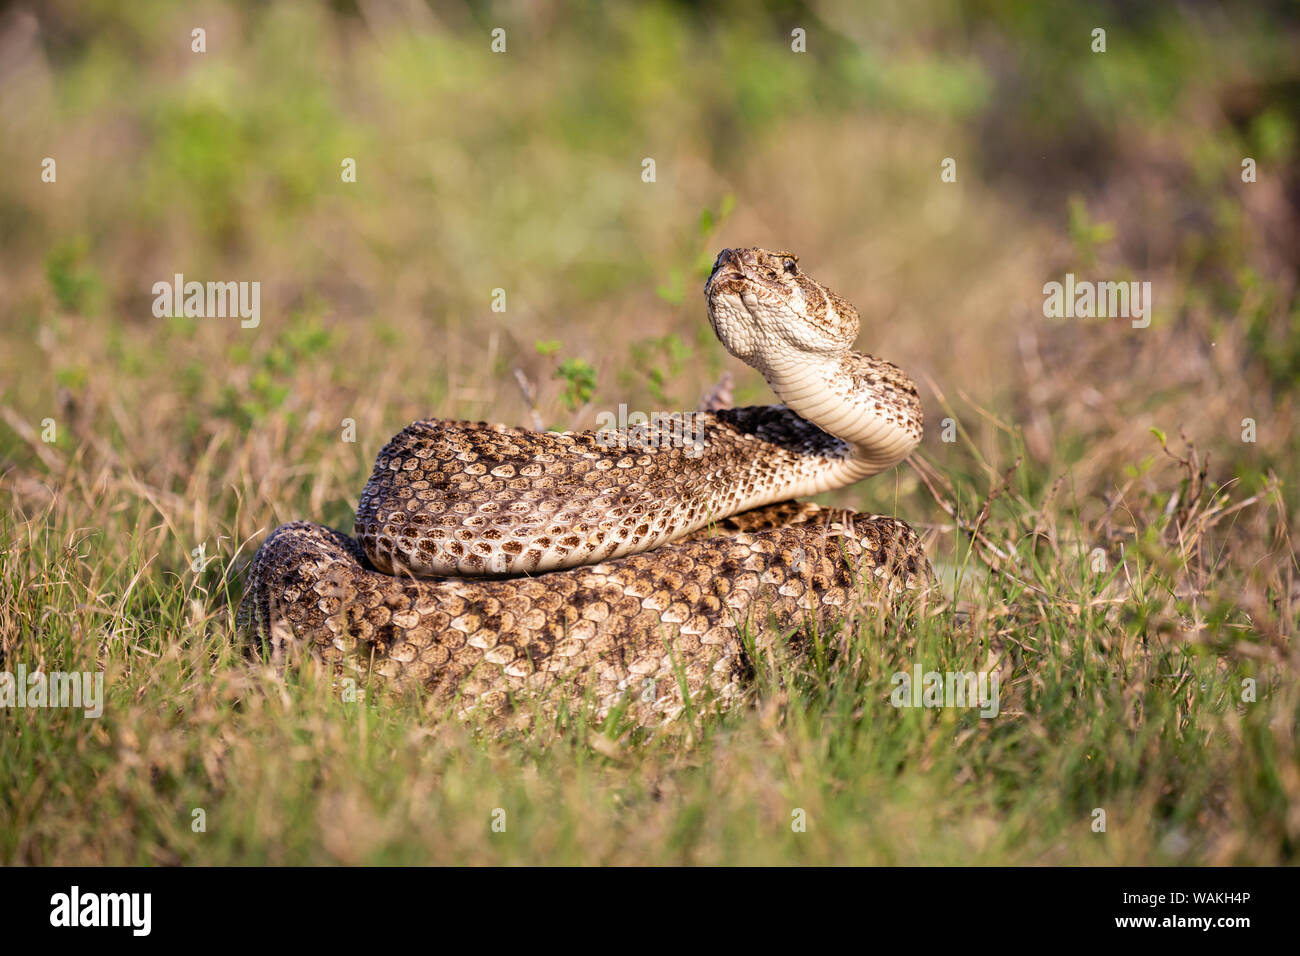 Western diamondback rattlesnake (Crotalus atrox) coiled. Stock Photo